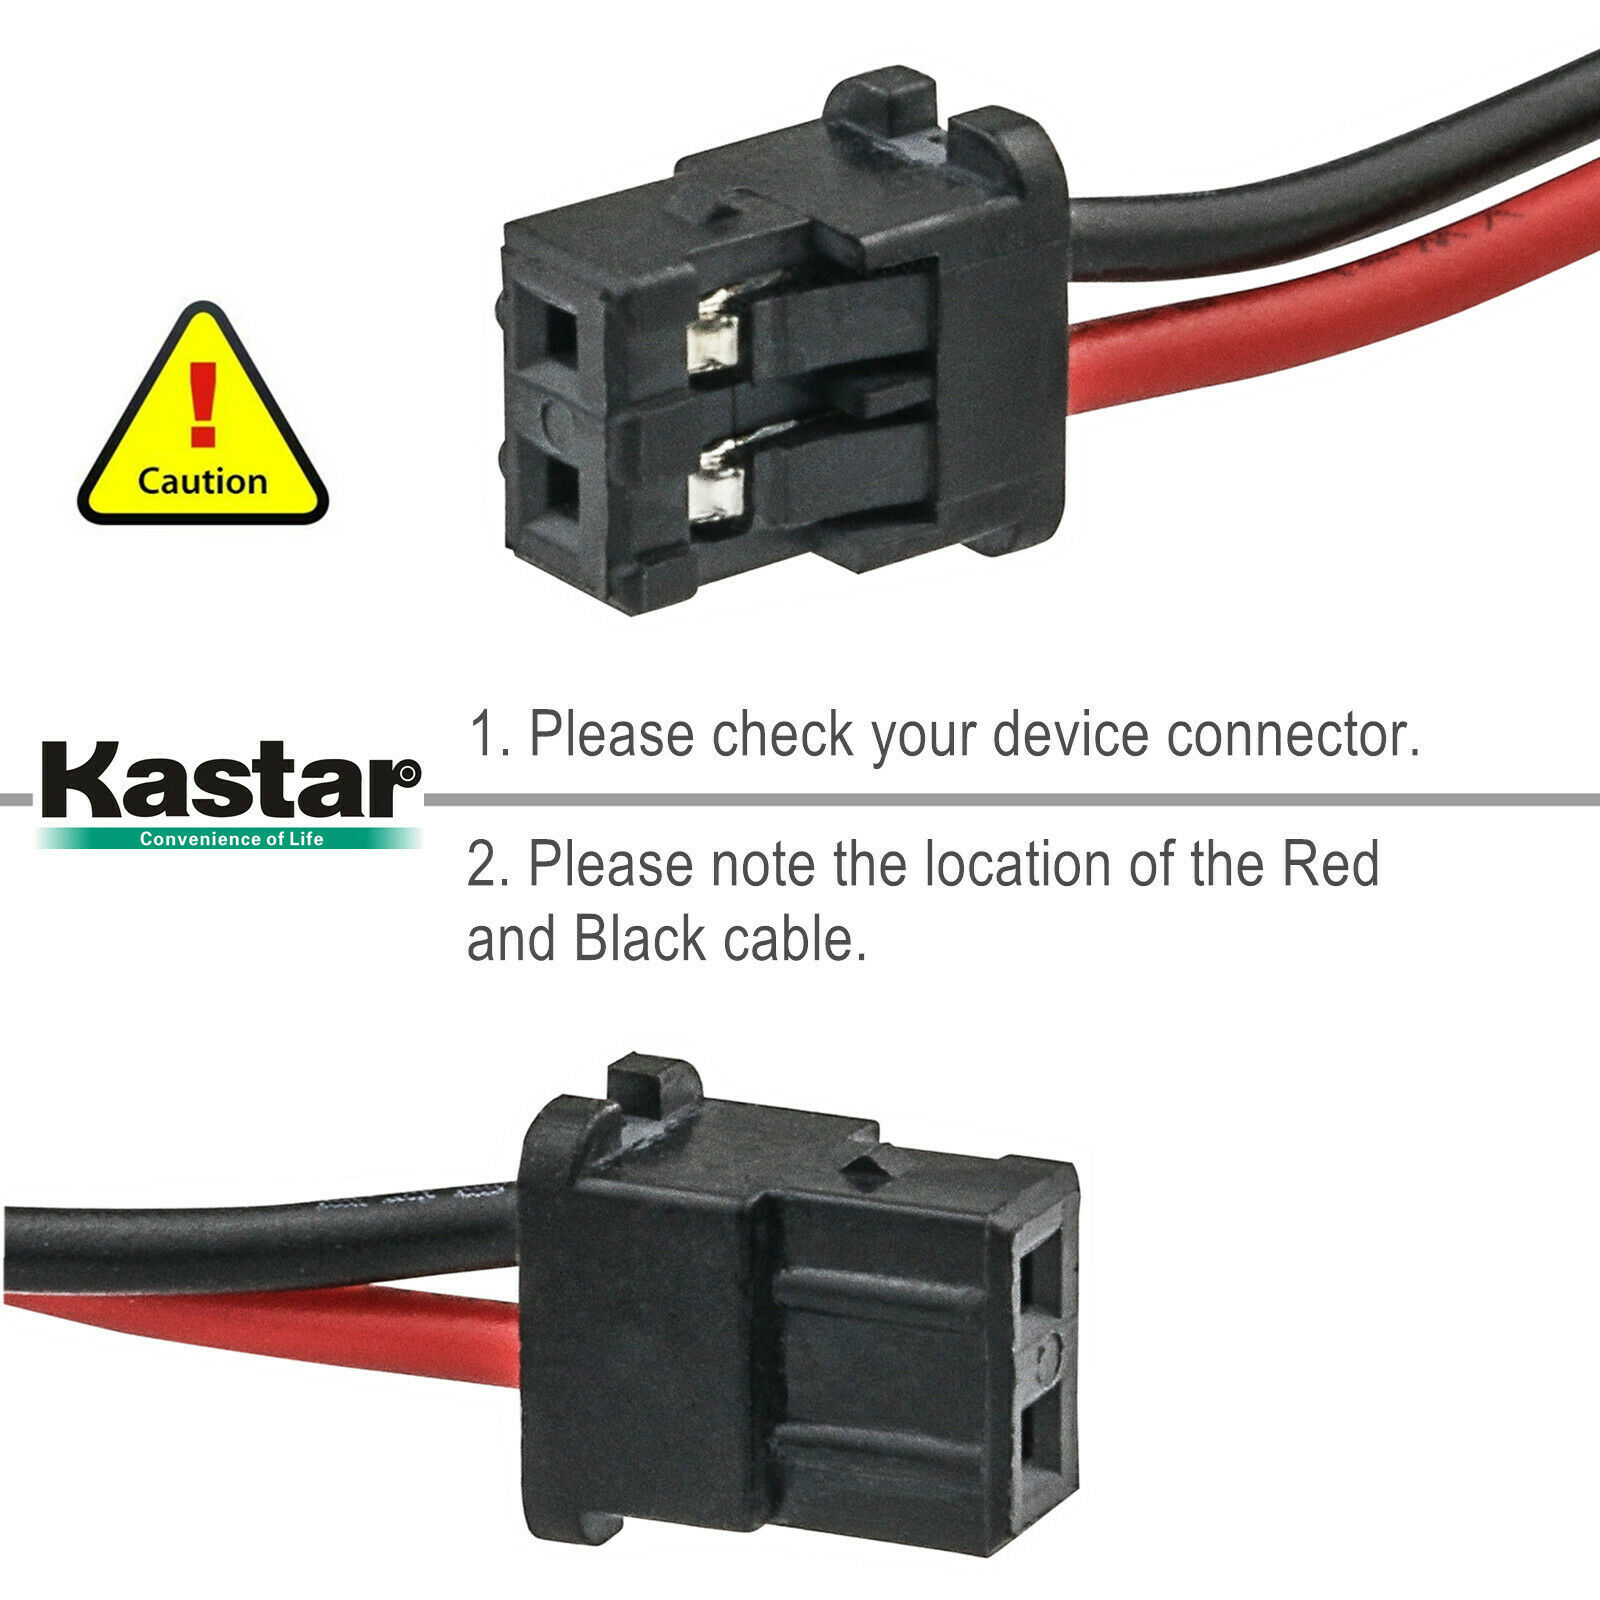 Kastar 3-Pack 2/3AA 3.6V 800mAh Ni-MH Battery Replacement for Panasonic KX-T3965 KX-T3967 KX-T3980 KX-T4168 KX-T4200 KX-T4200R KX-T4300 KX-T4310 KX-T4330 KX-T4340 KX-T4342 KX-T4350 KX-T4360 KX-T4365 - image 2 of 3